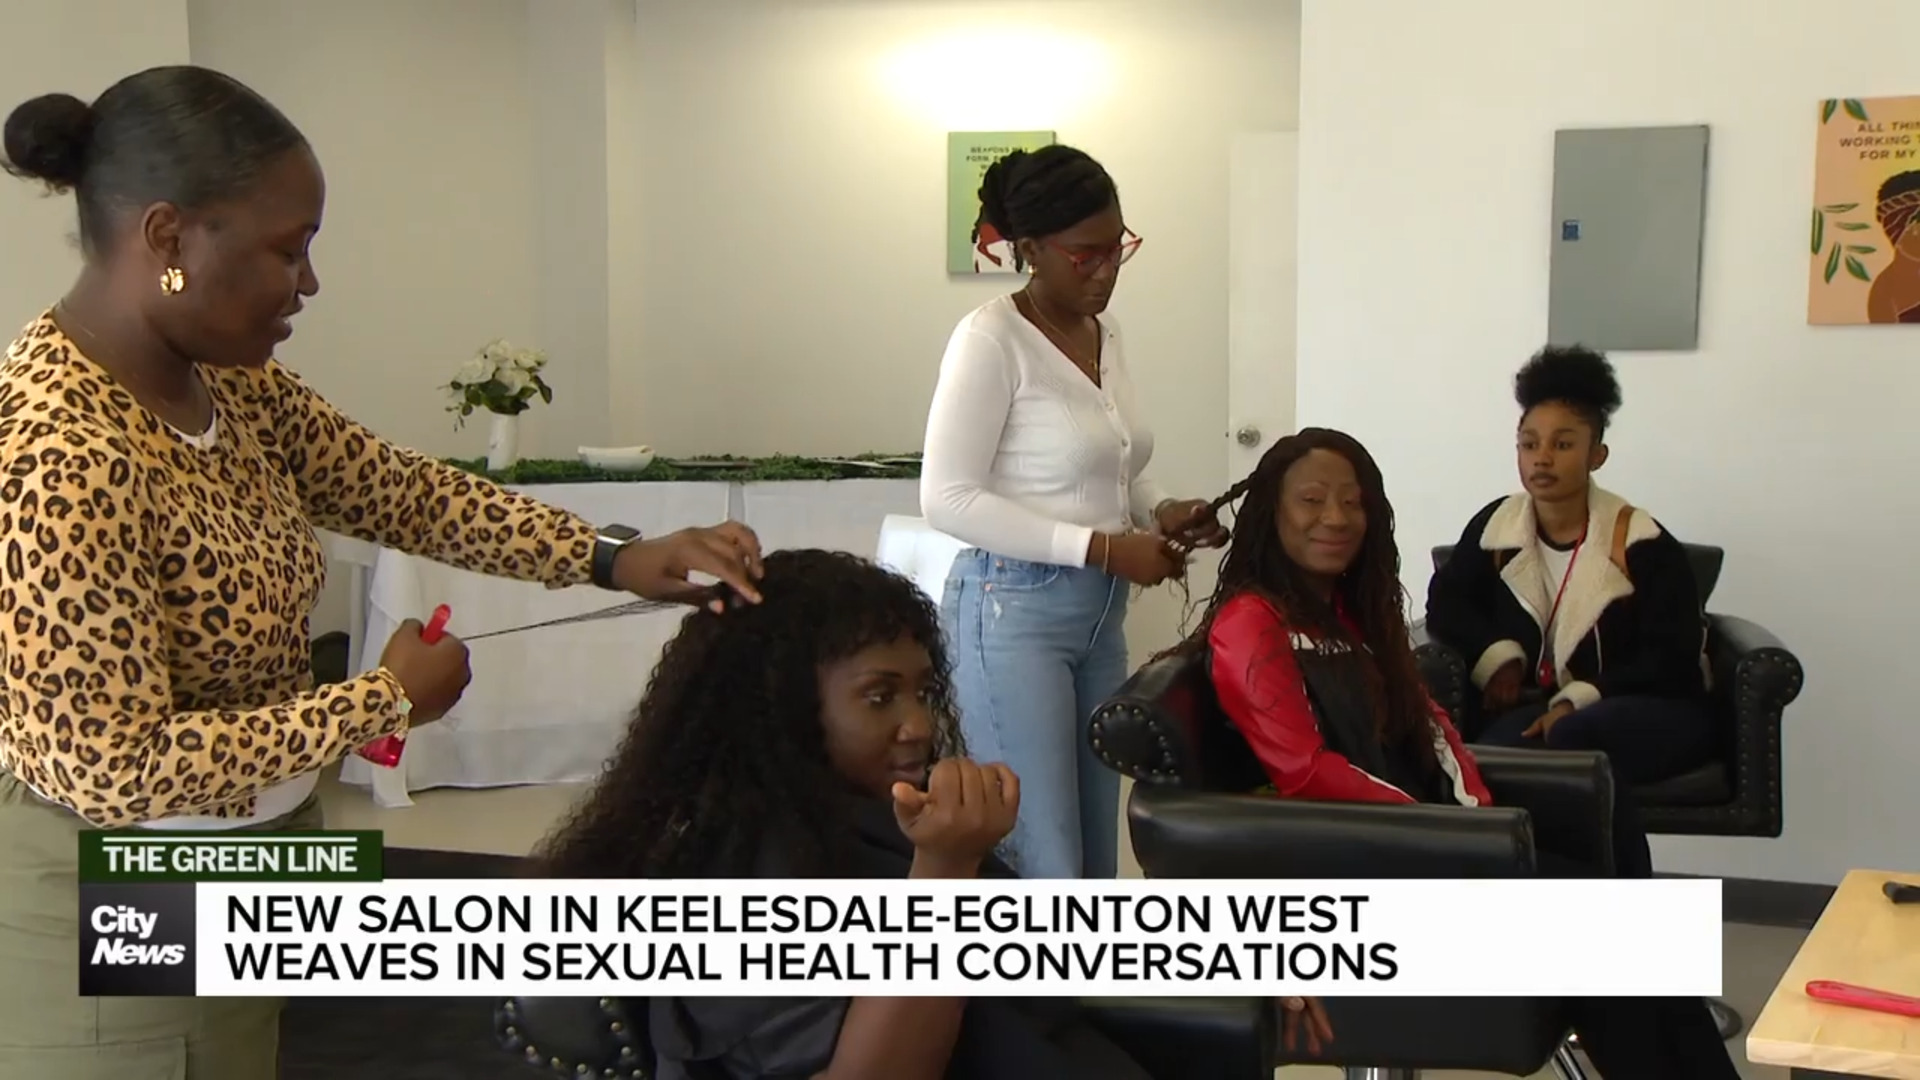 New salon in Keelesdale-Eglinton West weaves in sexual health conversations